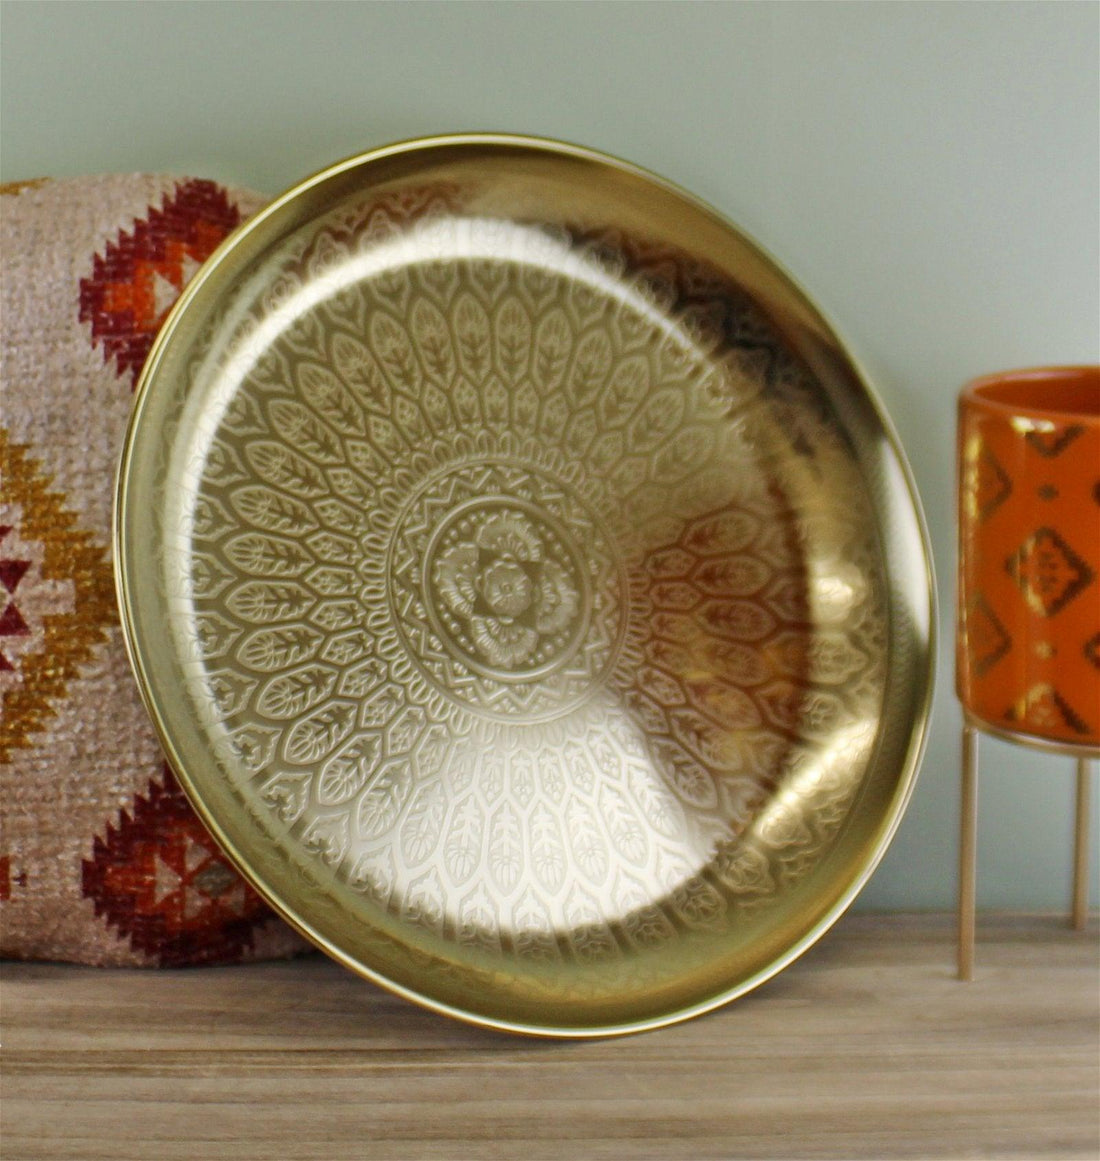 Kasbah Design Decorative Gold Metal Tray - £22.99 - Bowls & Plates 